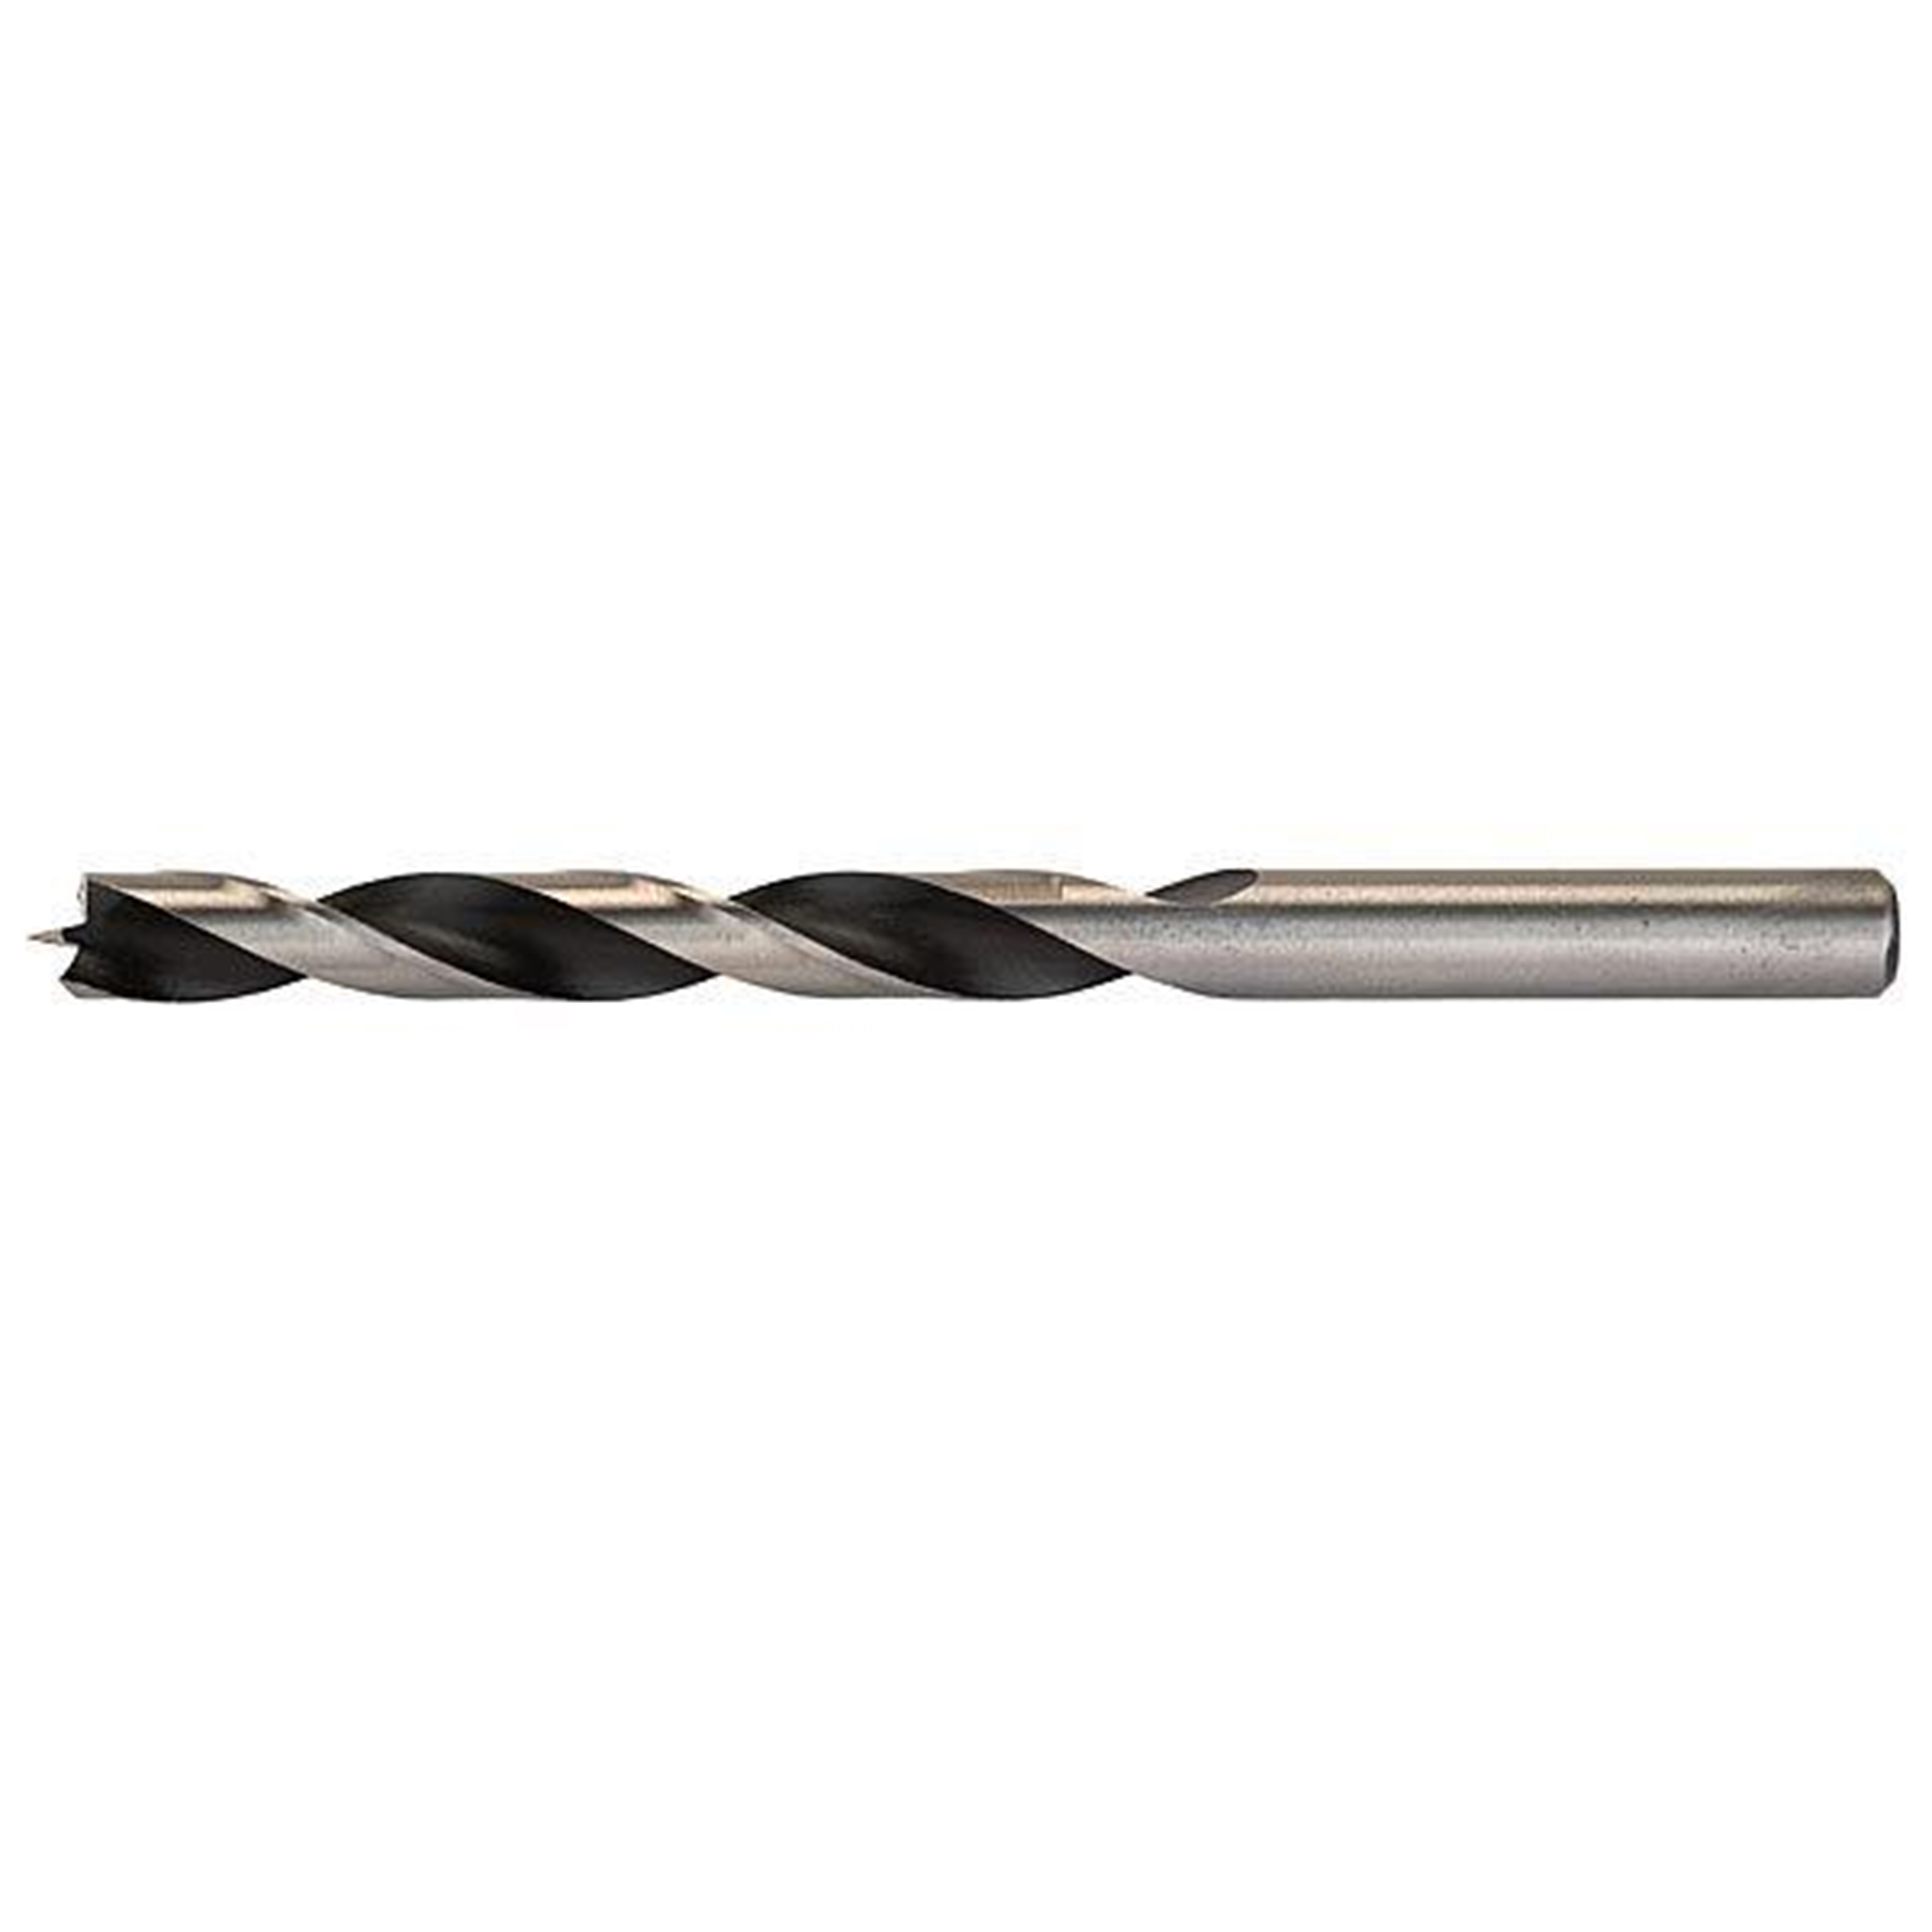 9mm Chrome-vanadium Steel Brad Point Drill Bit